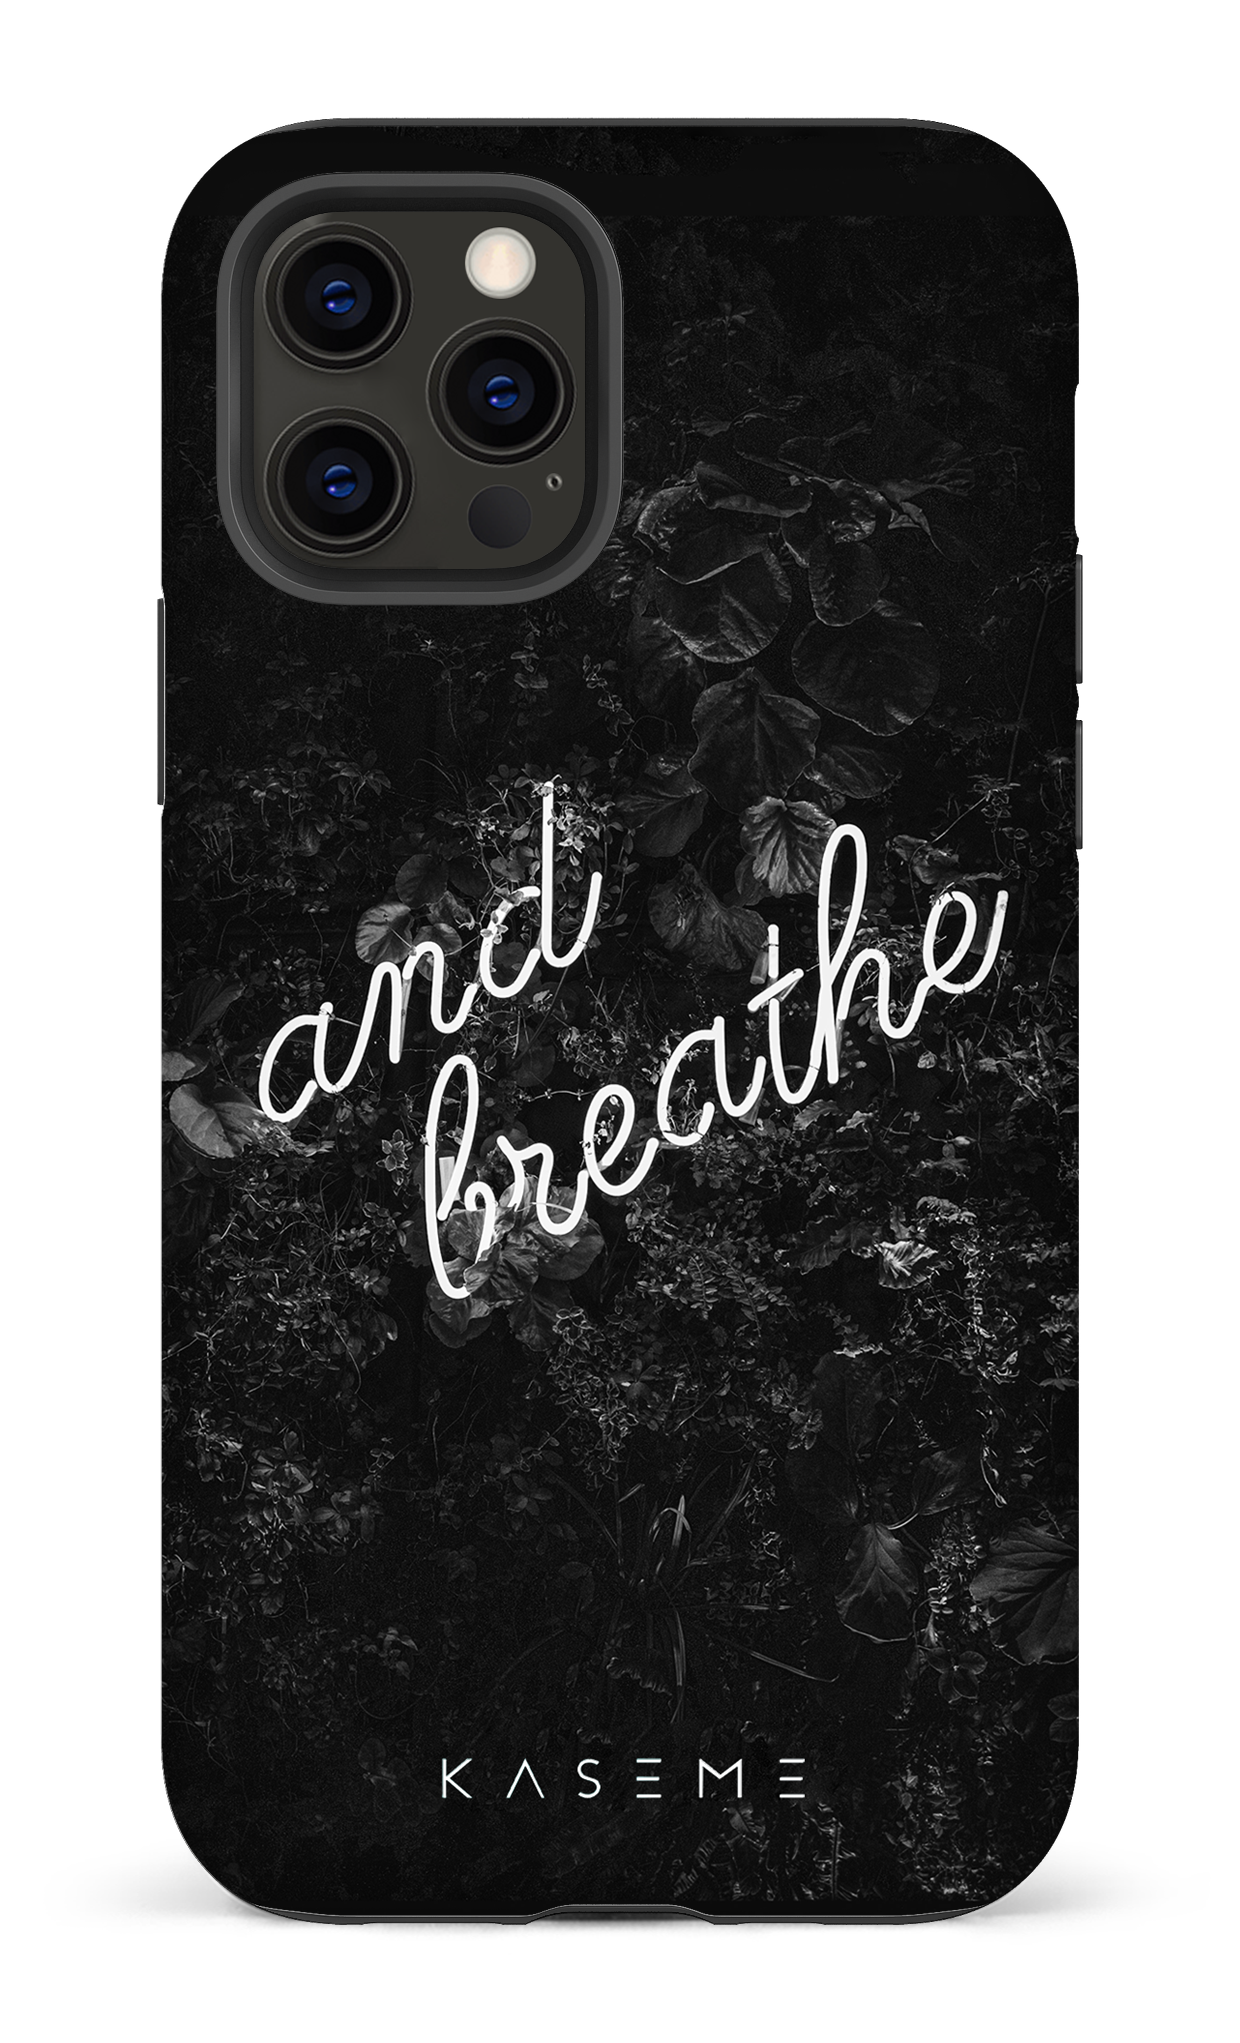 Exhale - iPhone 12 Pro